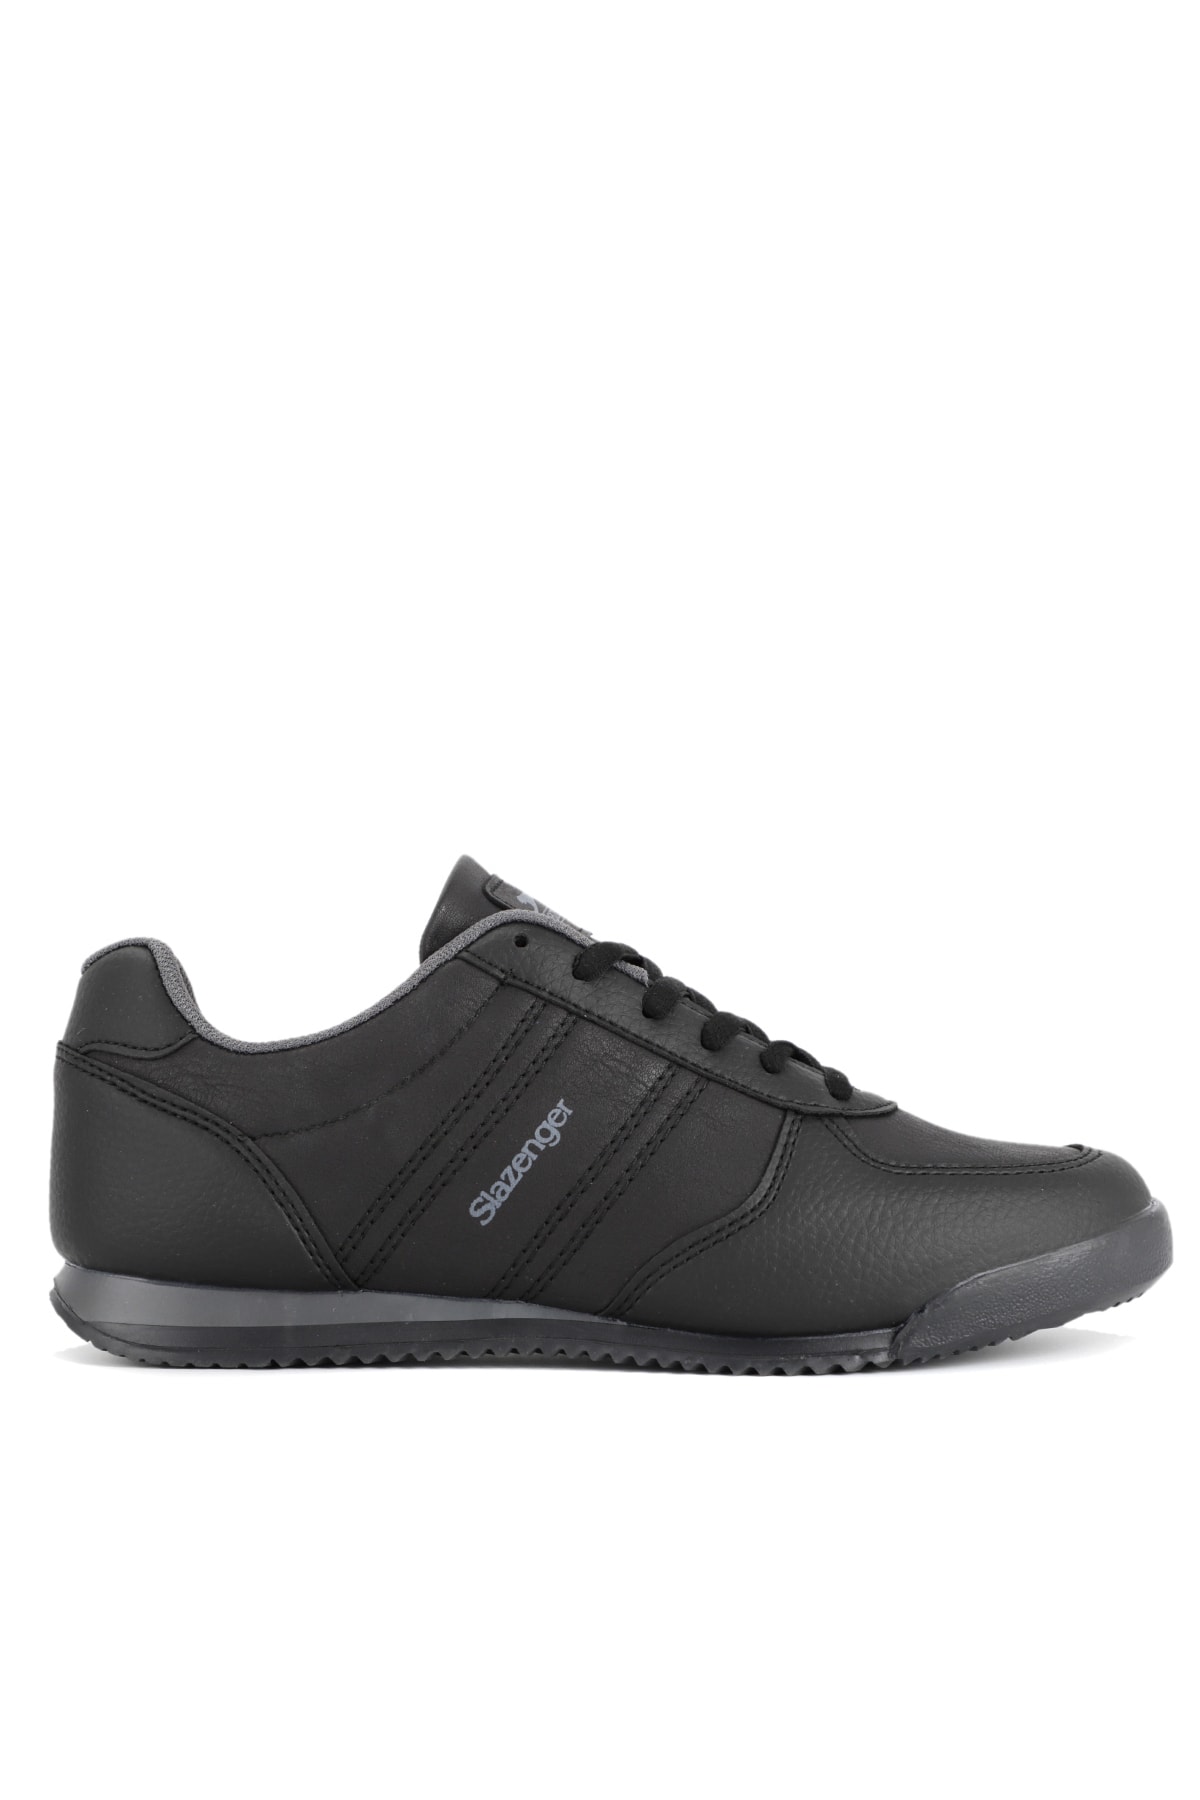 Slazenger Offıcer I Sneaker Ayakkabı Siyah / Gri